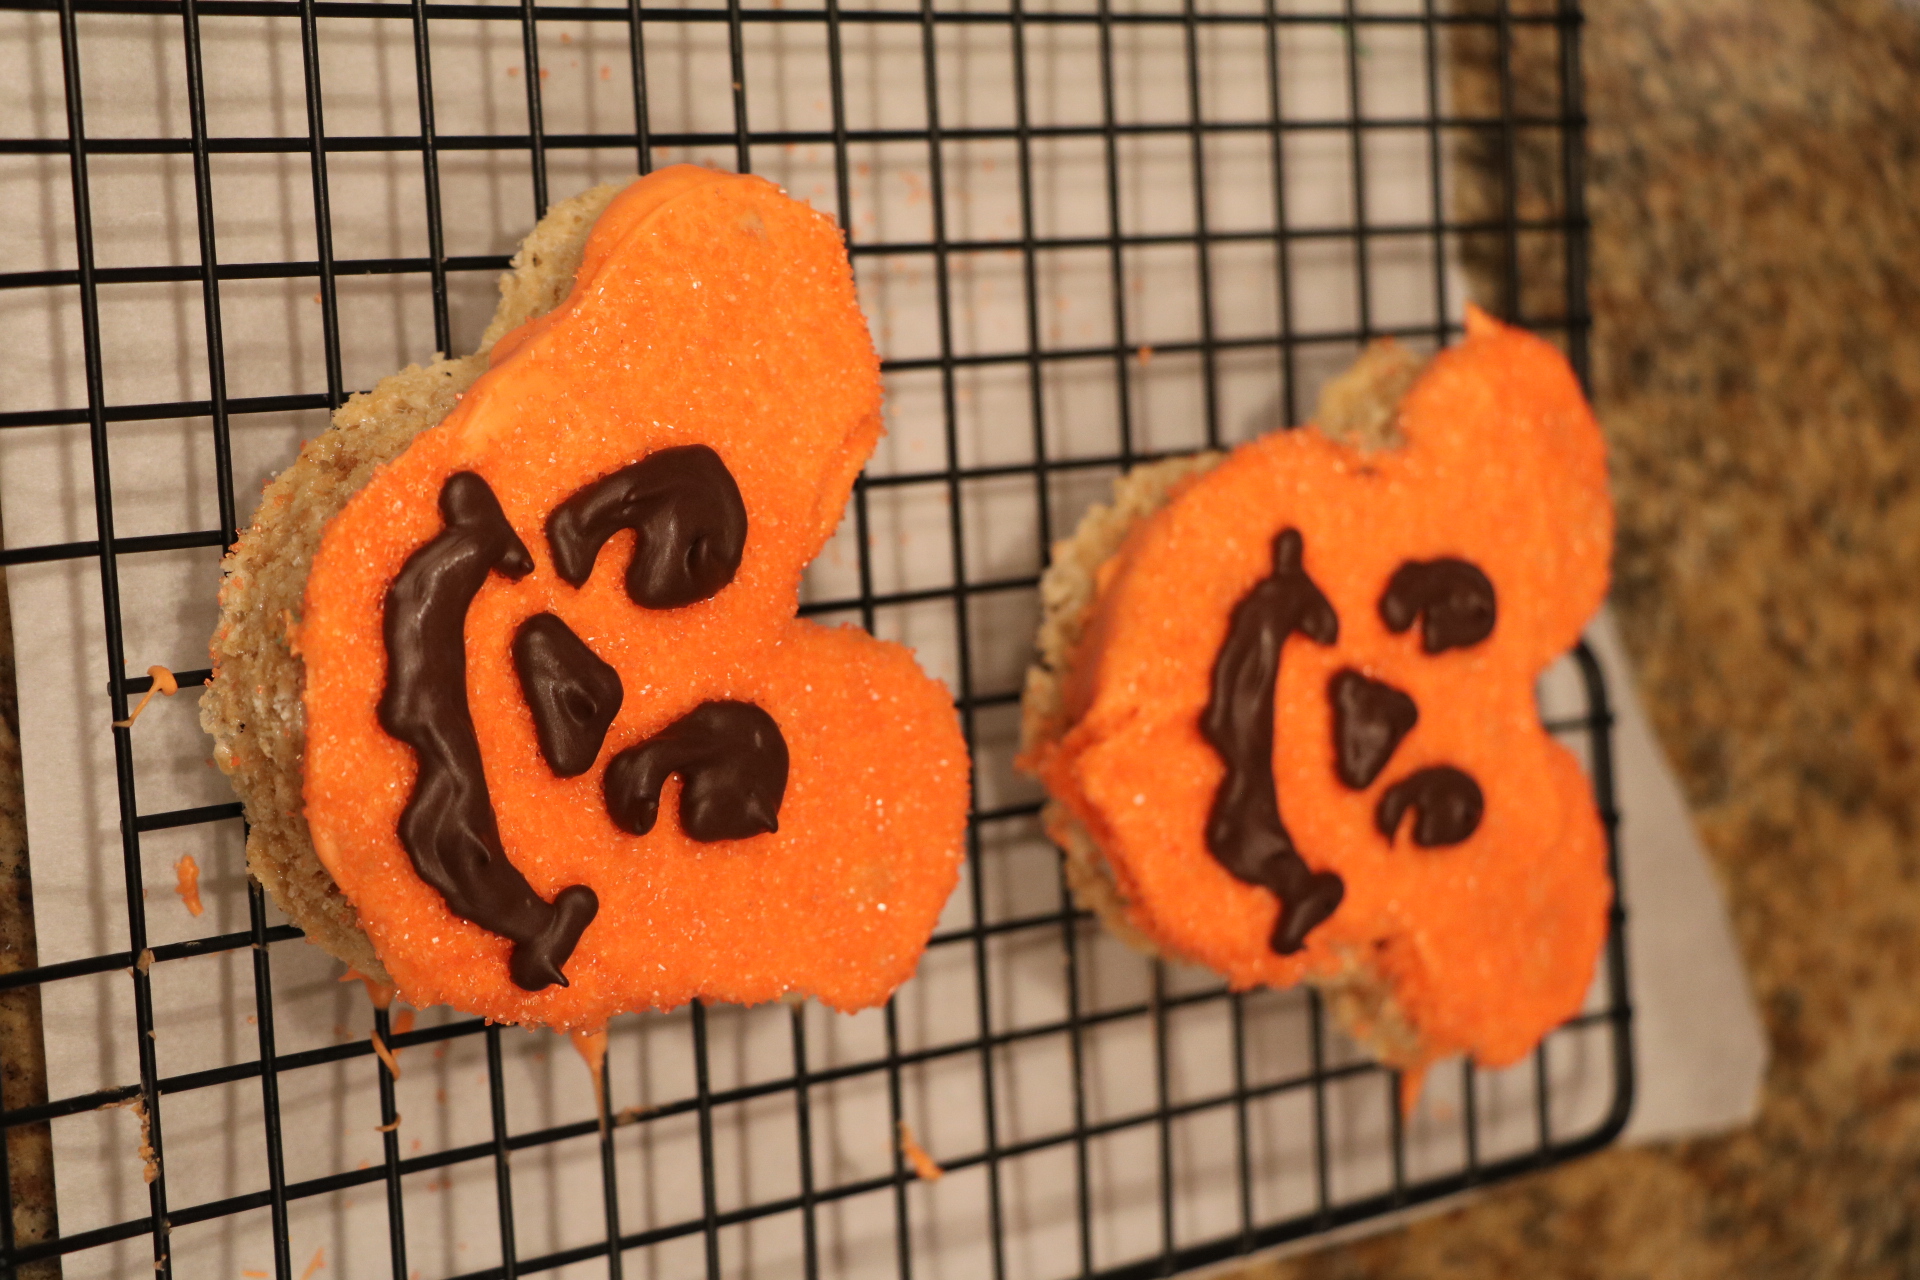 Enjoy a Spooky Holiday with this Fun DIY Recipe Celebrating Disney for Tasty Halloween-Inspired Rice Krispy Treats